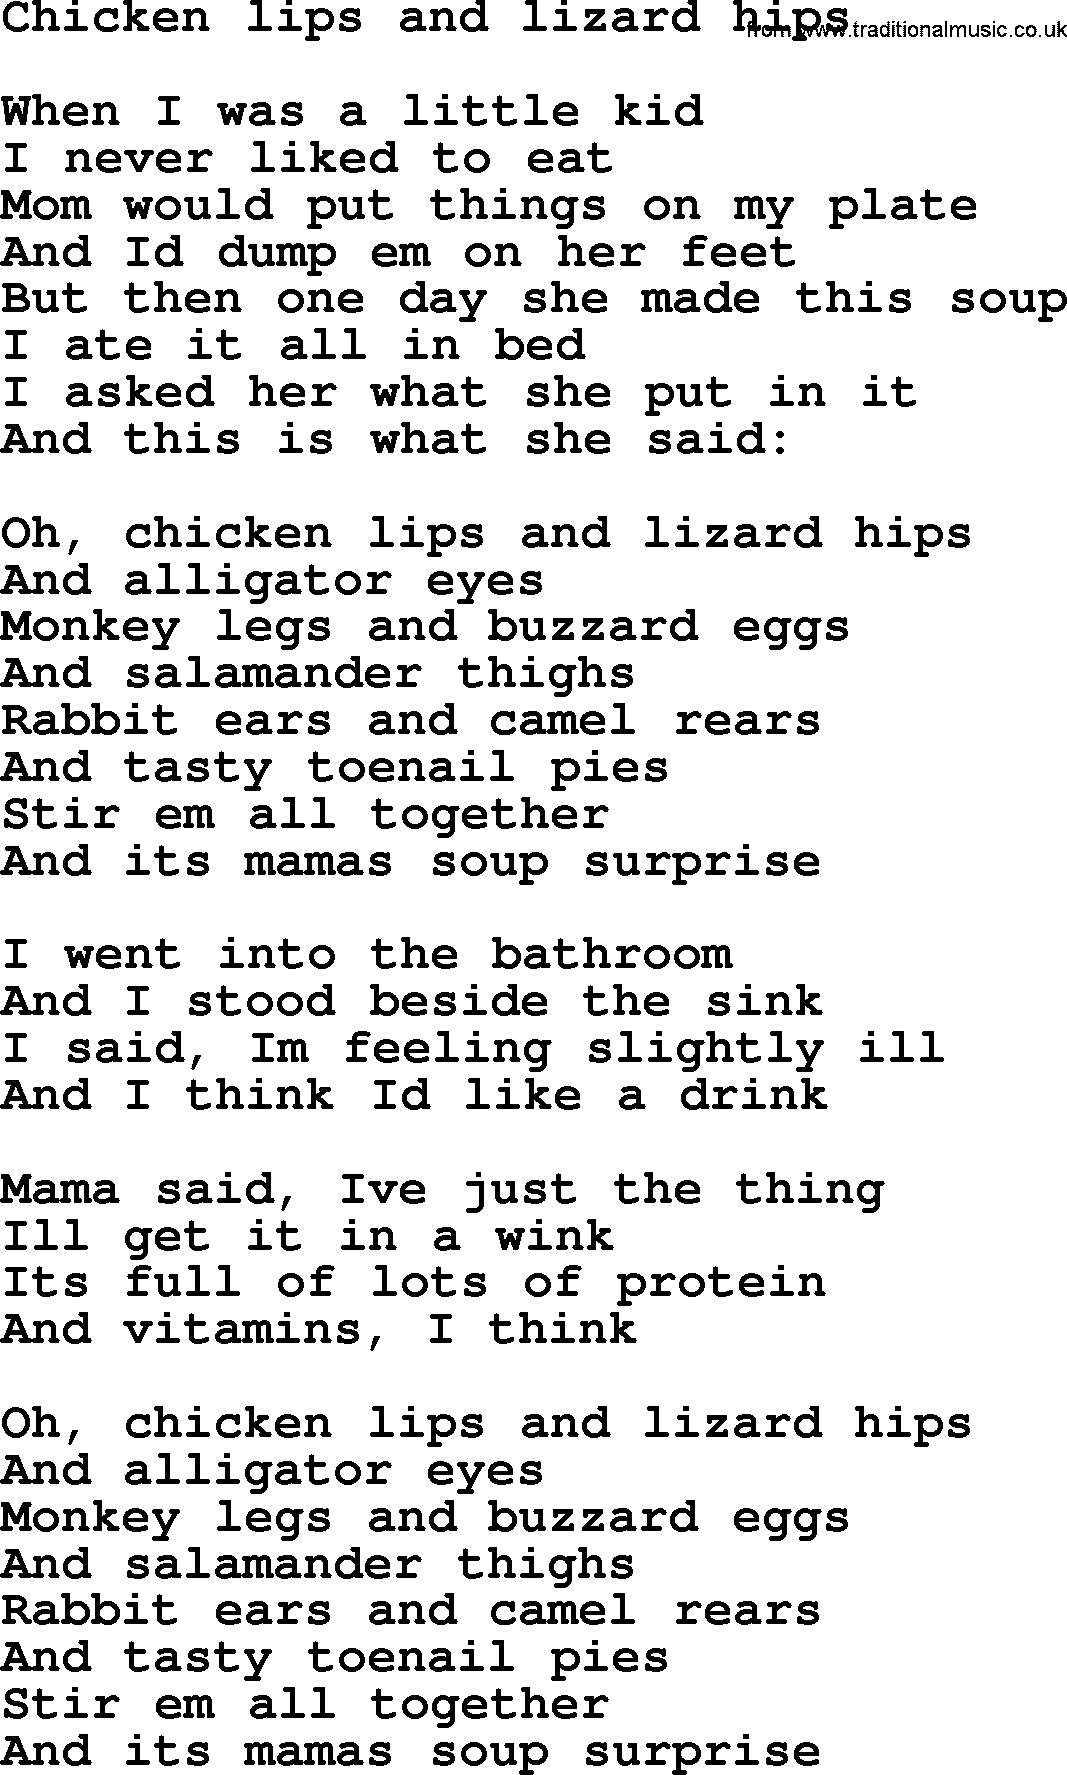 Bruce Springsteen song: Chicken Lips And Lizard Hips lyrics